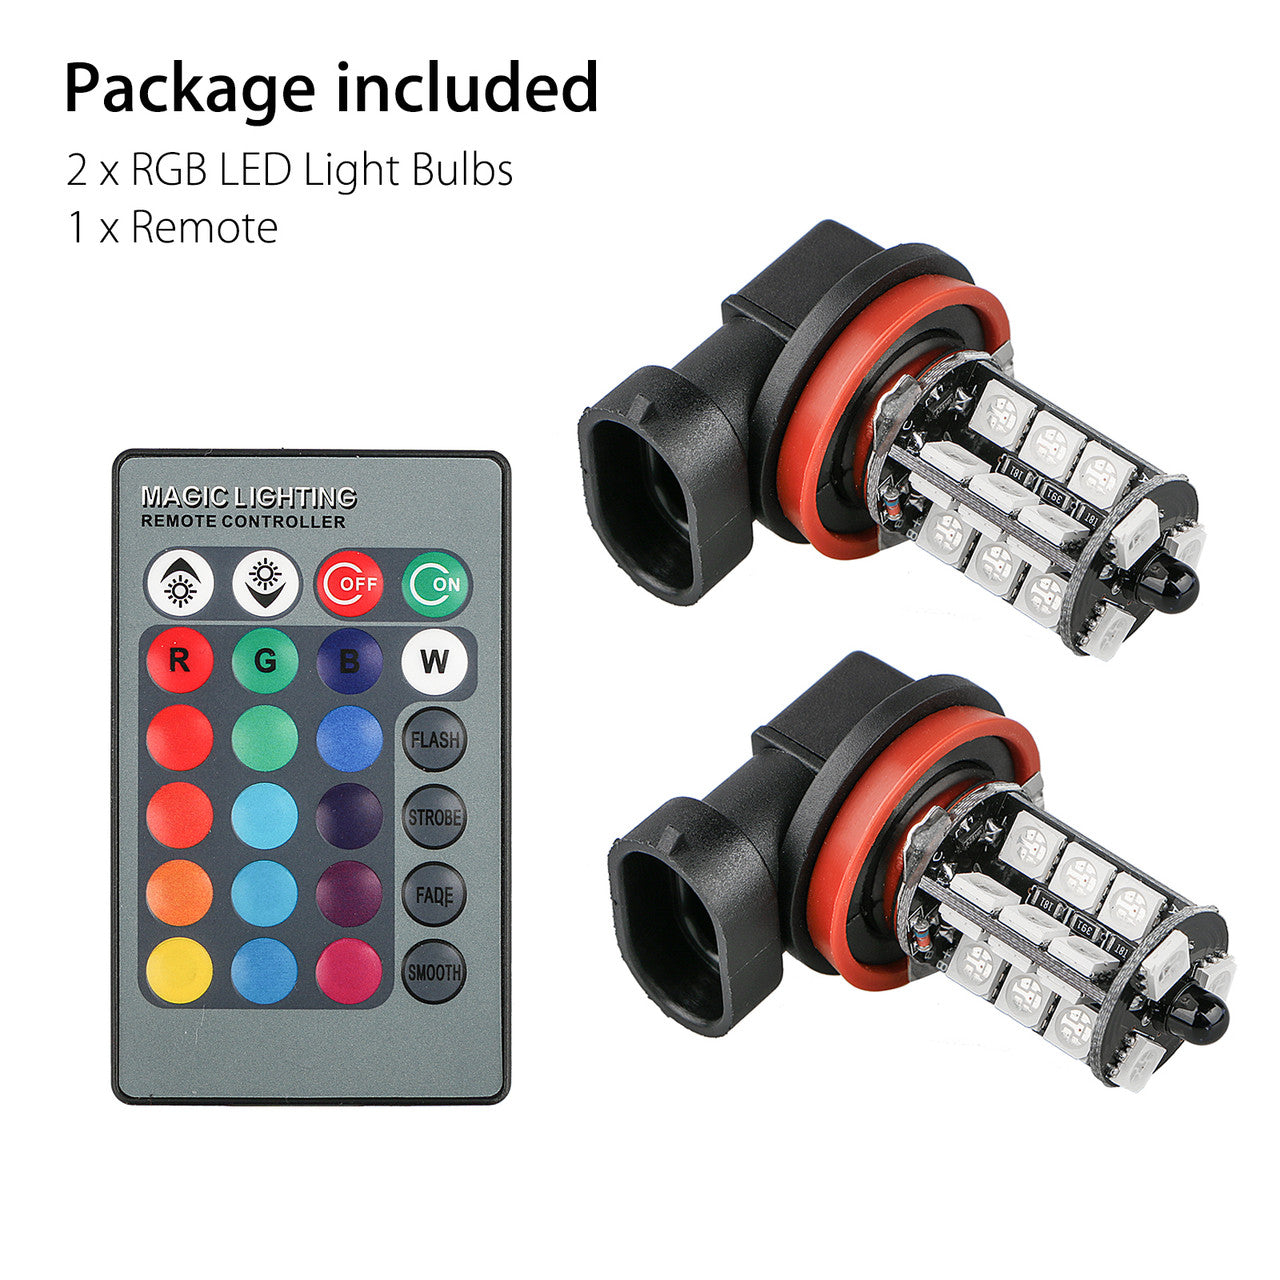 2PCS H8/H11 RGB Multi-Color Changing Brightness Modes Adjustment LED Car Safe Driving Headlight Fog Light Lamp Bulbs with Remote Control